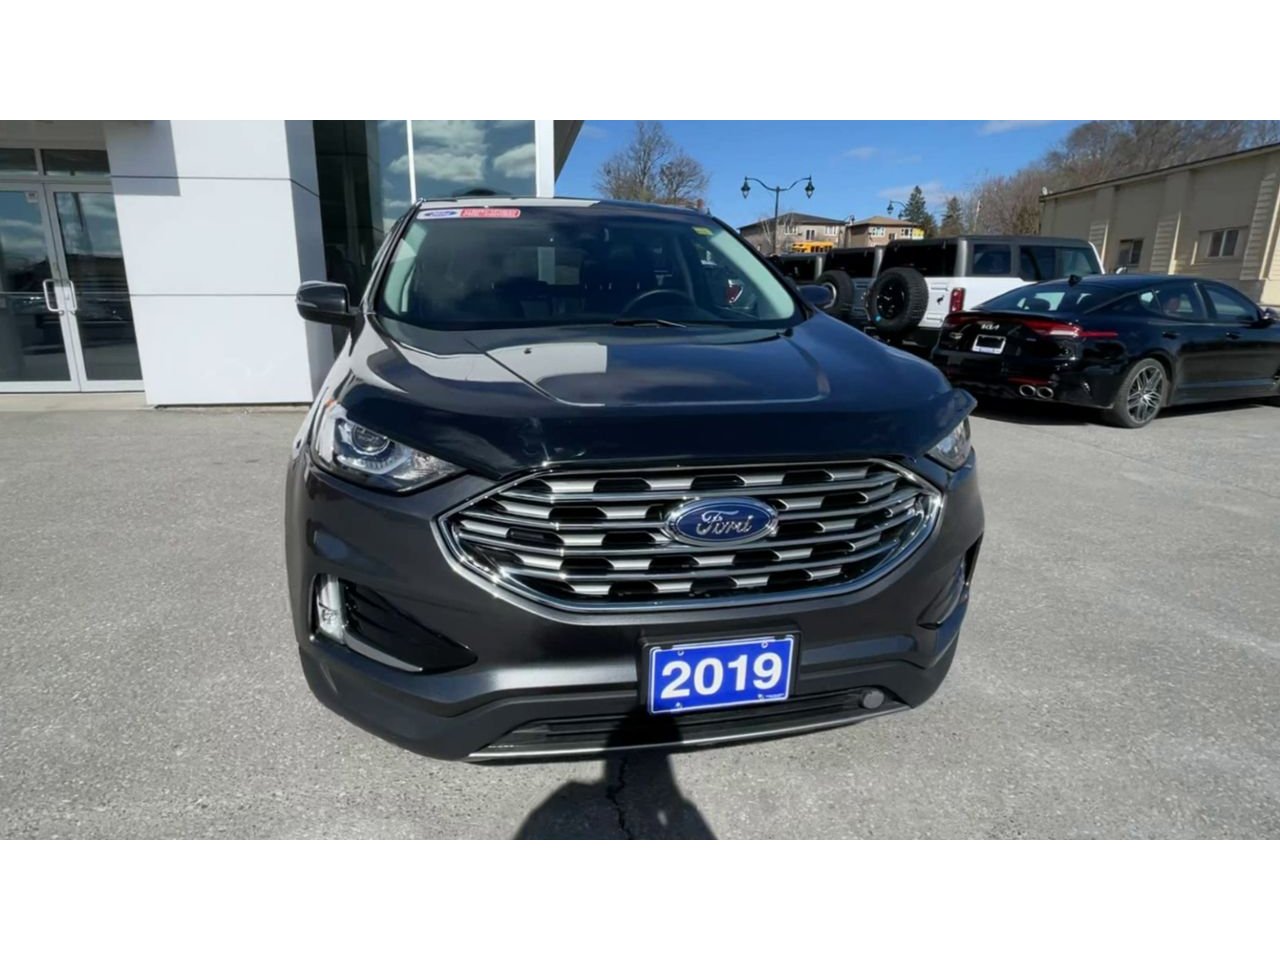 2019 Ford Edge - P21809 Full Image 3